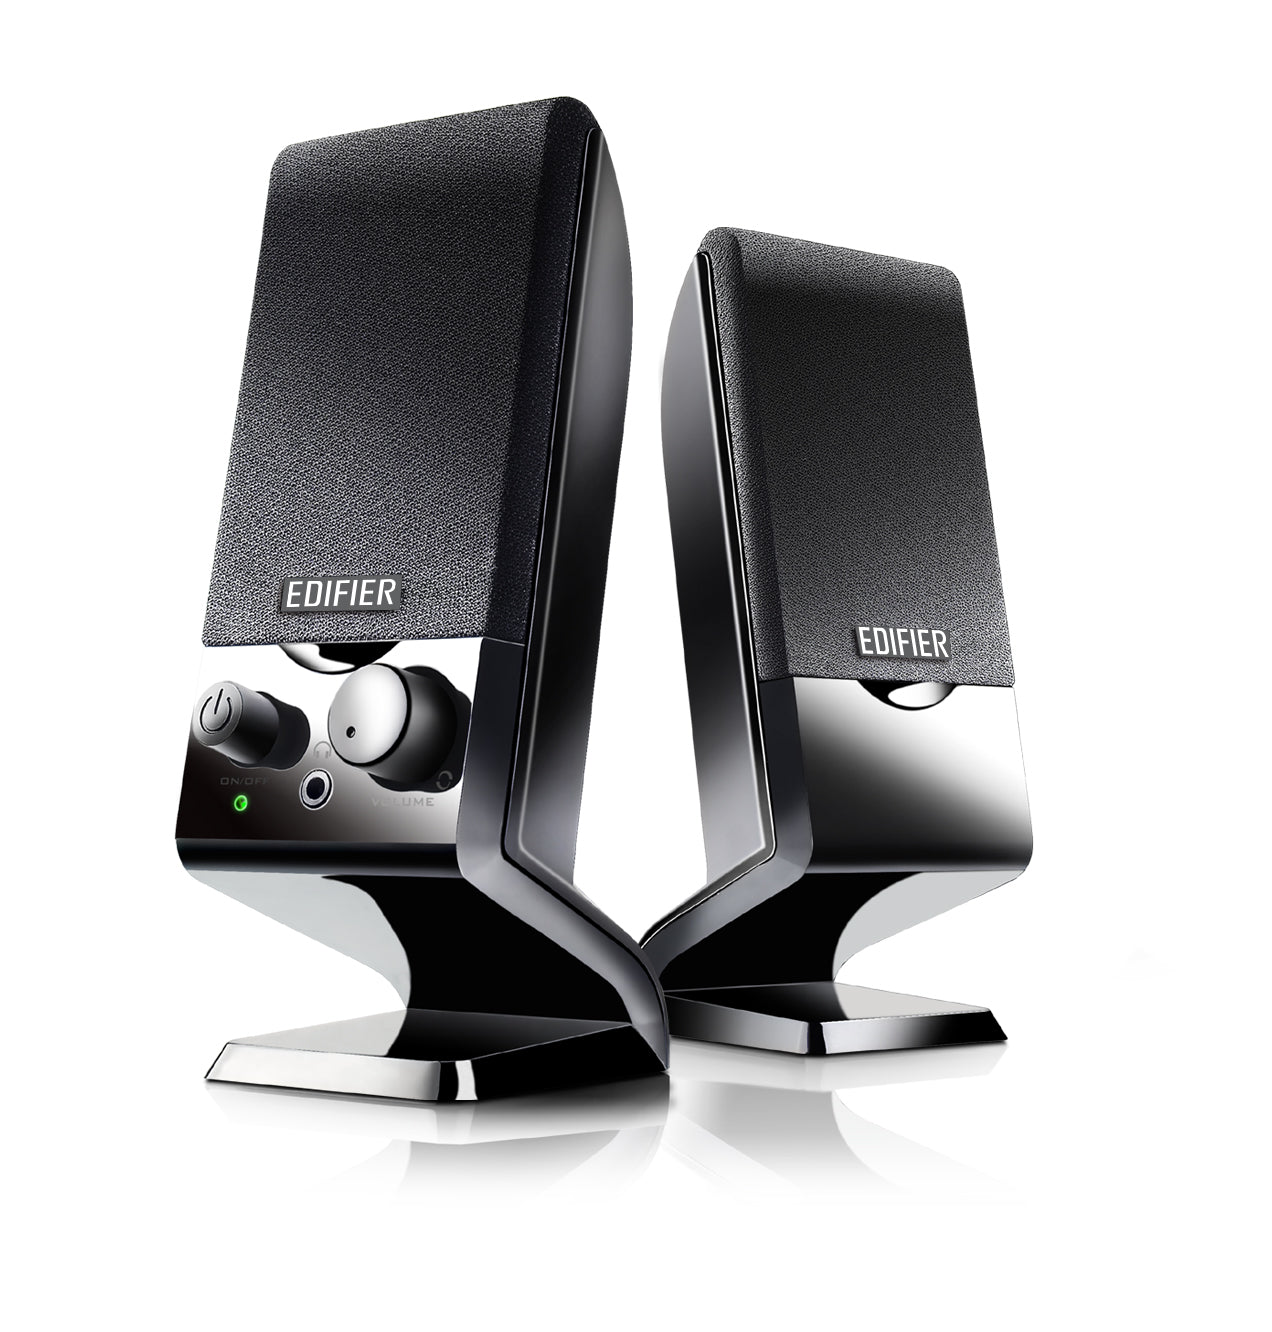 Edifier M1250 Multimedia Speakers